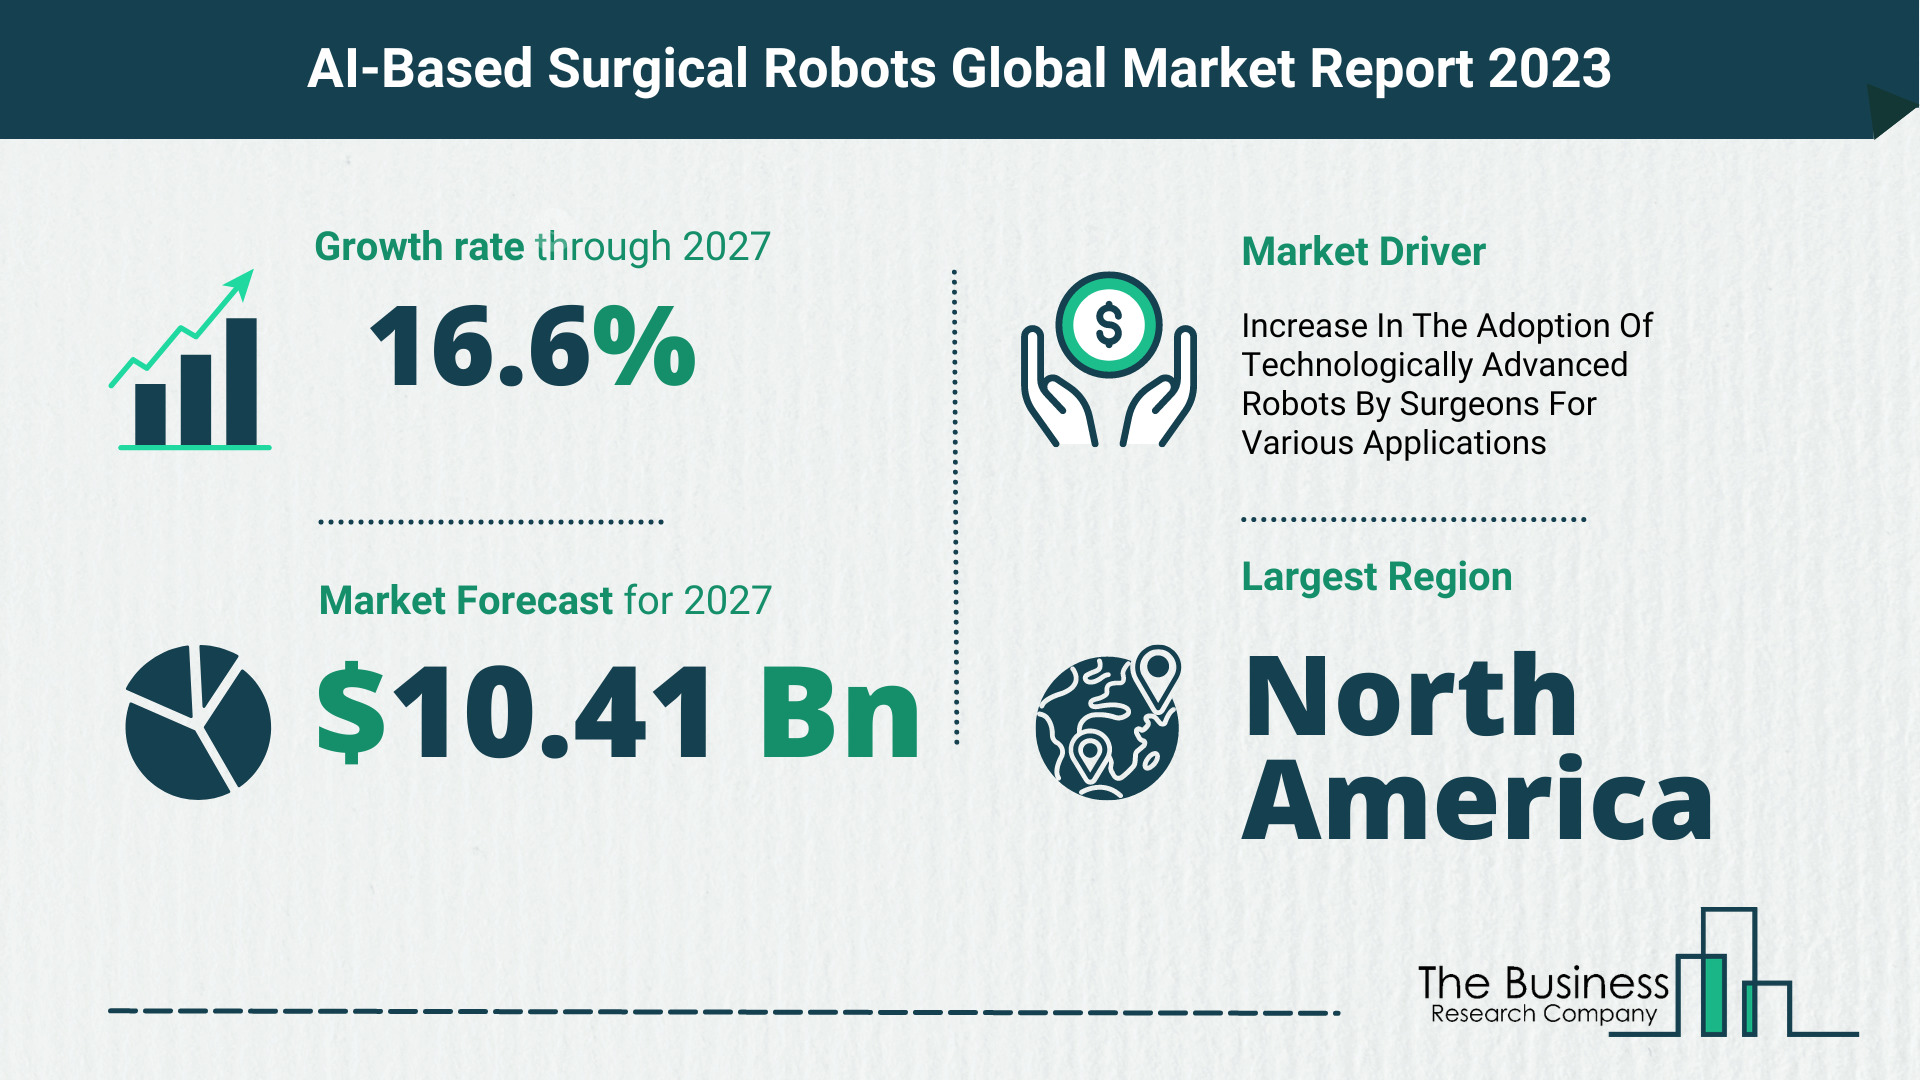 Global AI-Based Surgical Robots Market Size